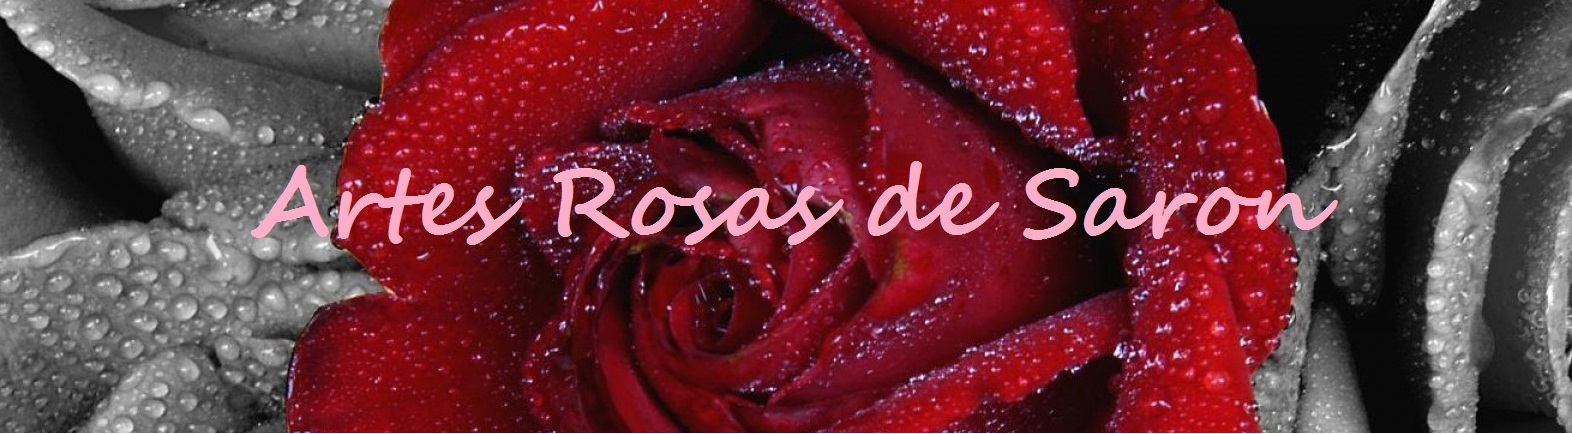 Artes Rosas de Saron